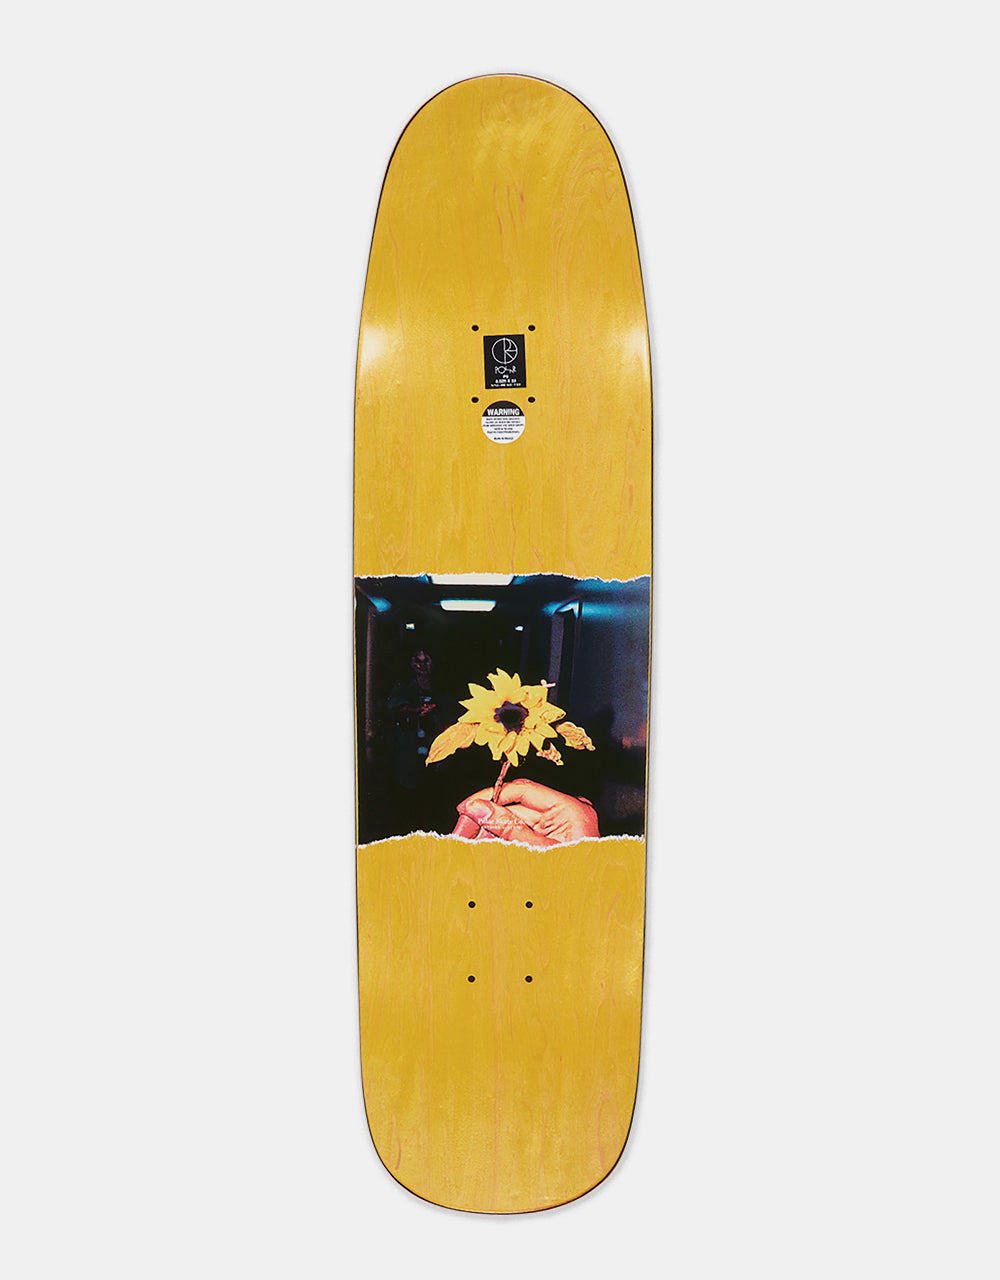 Polar Boserio Flower Skateboard Deck - 8.625"